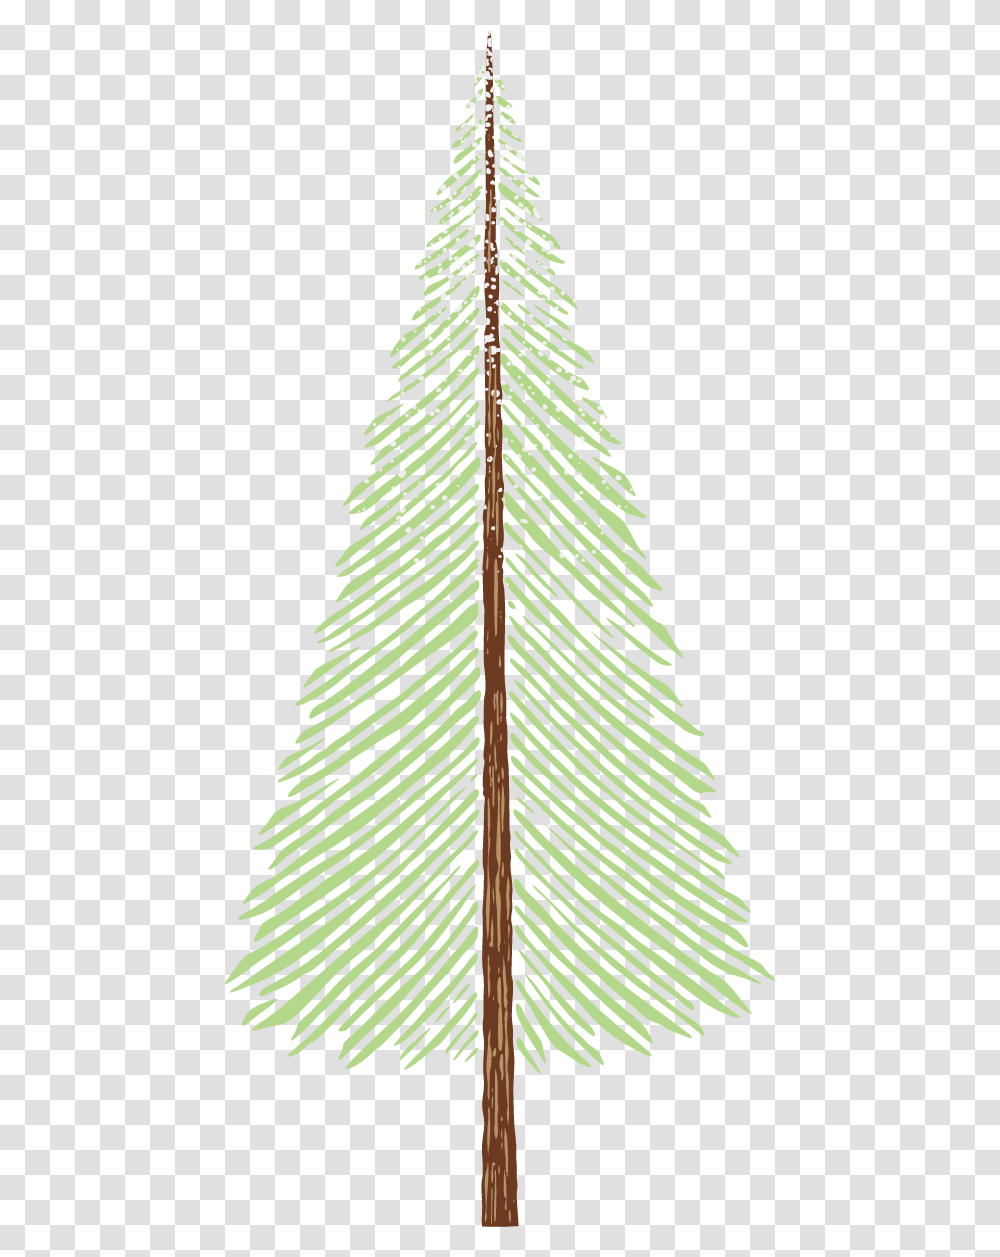 Cedar Tree Graphic Picmonkey Graphics Pond Pine, Plant, Ornament, Christmas Tree, Fir Transparent Png